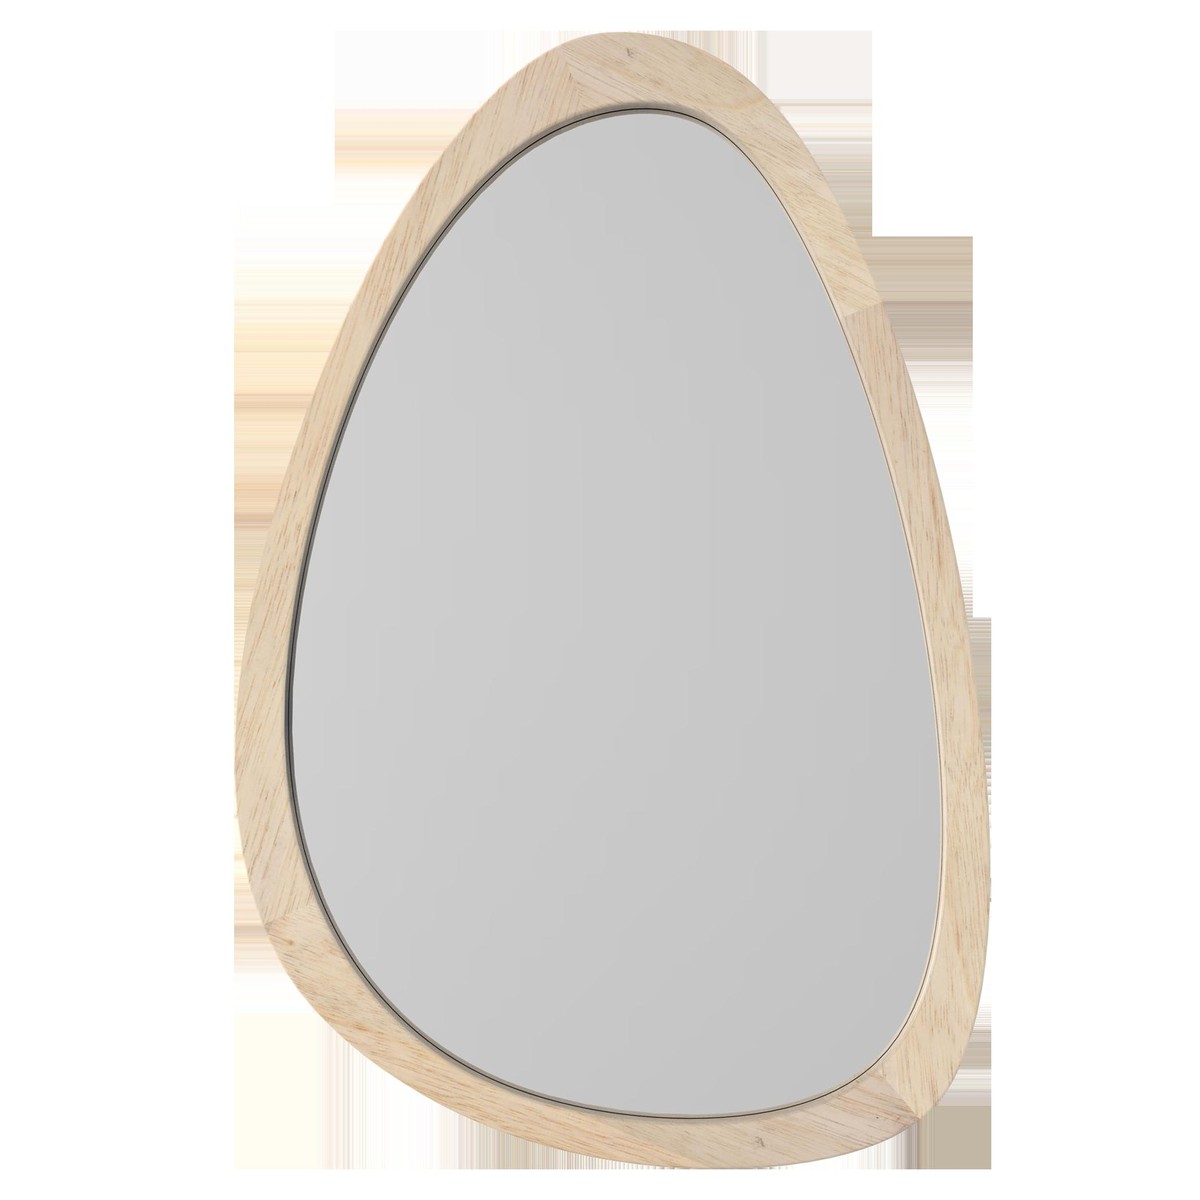   Miroir organique bois clair 40x60cm  40x60cm